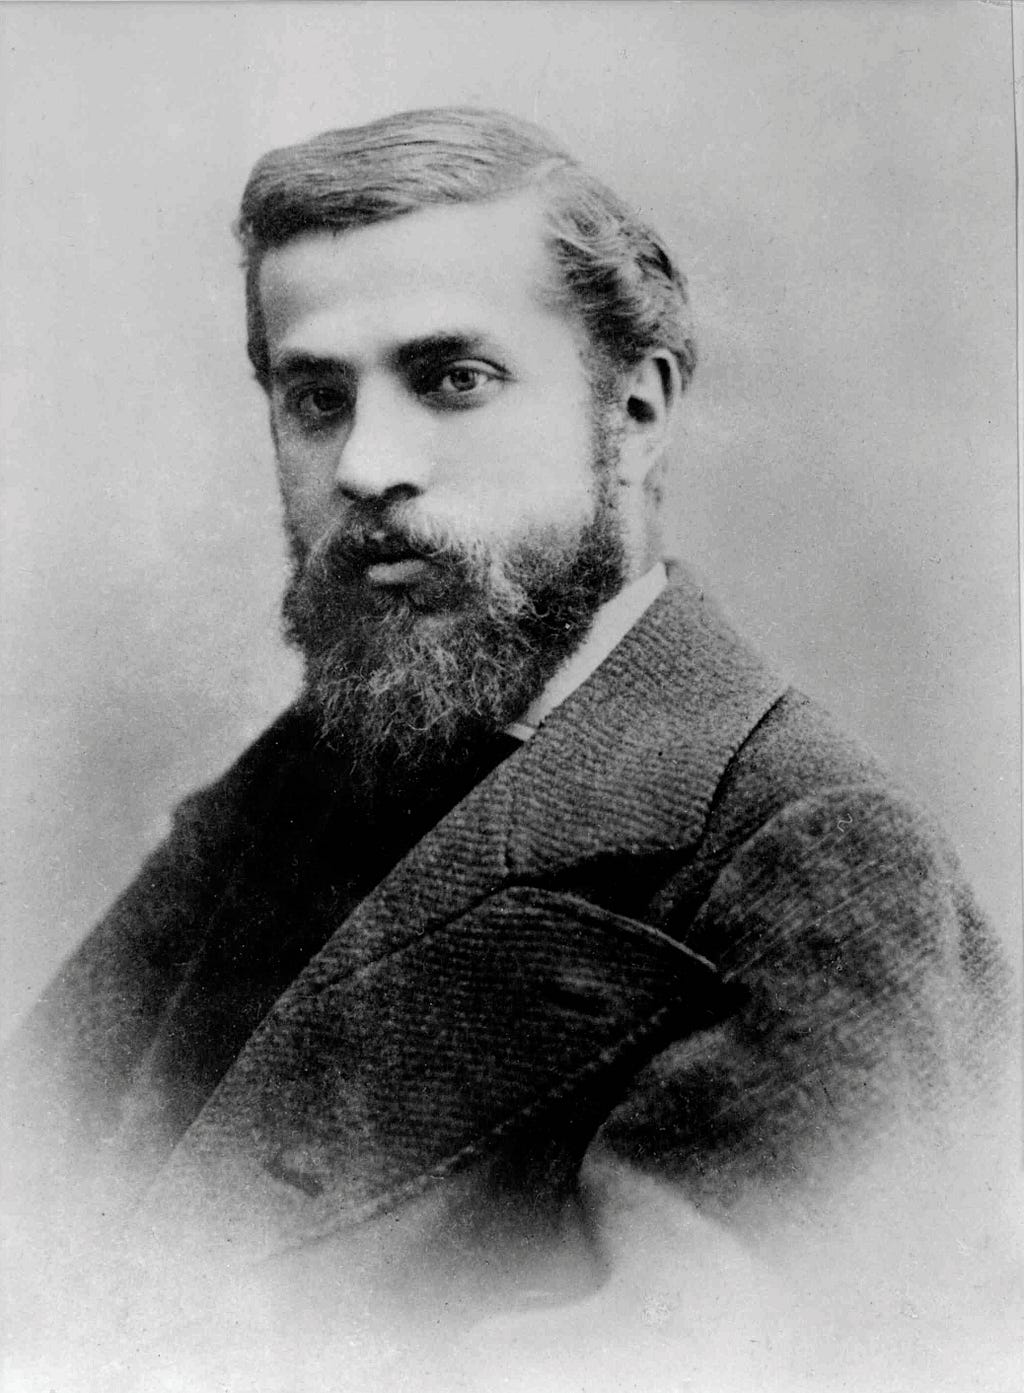 A black and white portrait of Antoni Gaudí.